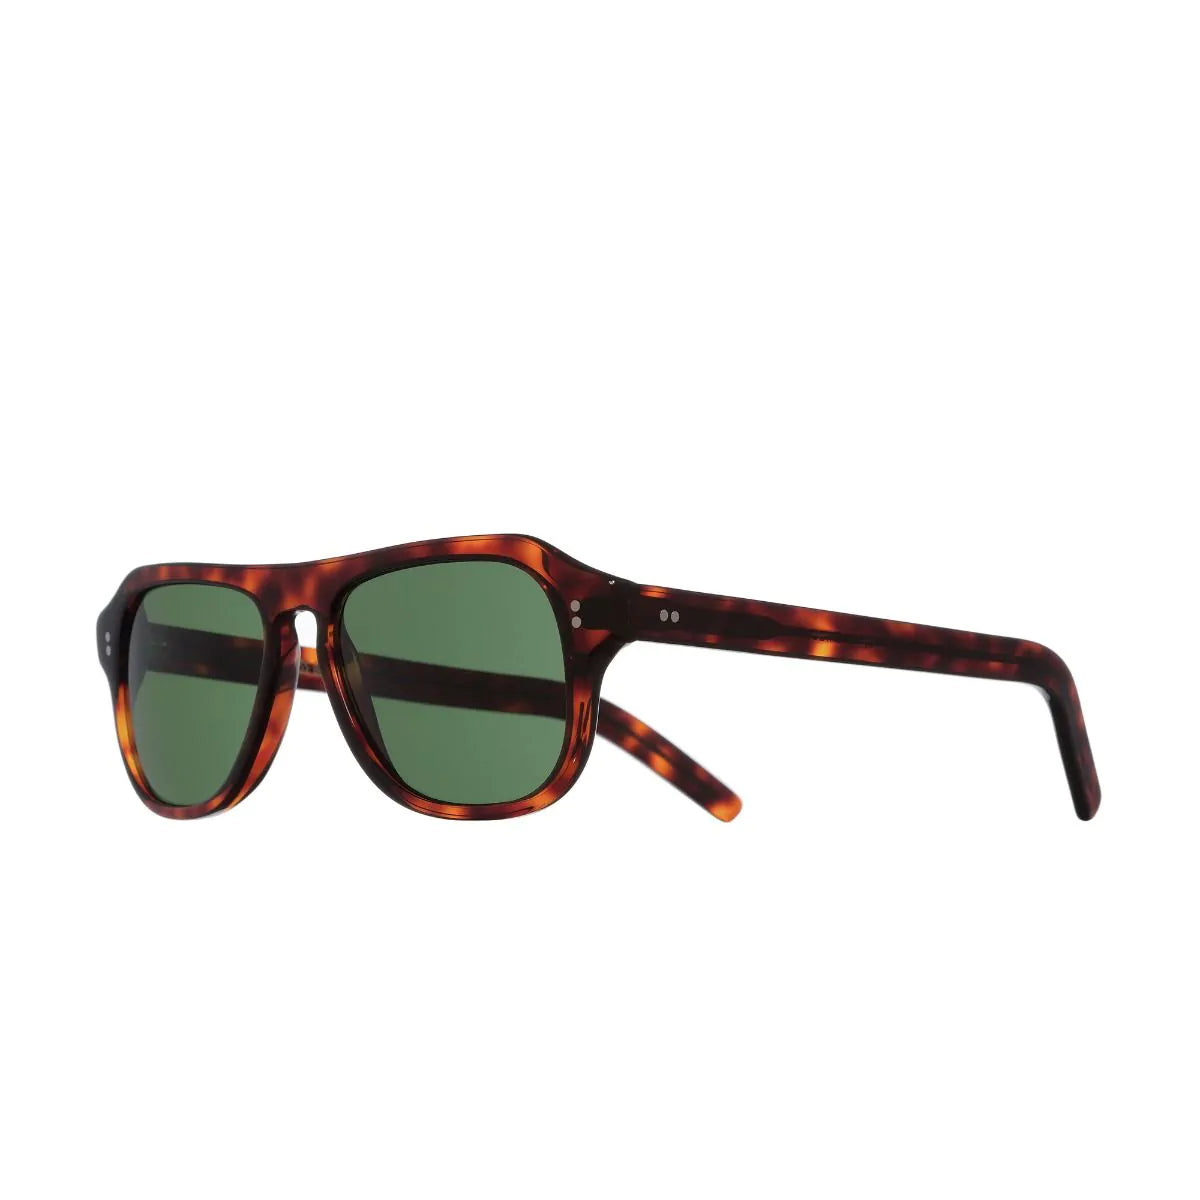 0822V2 Aviator Sunglasses - Dark Turtle / Dark Green